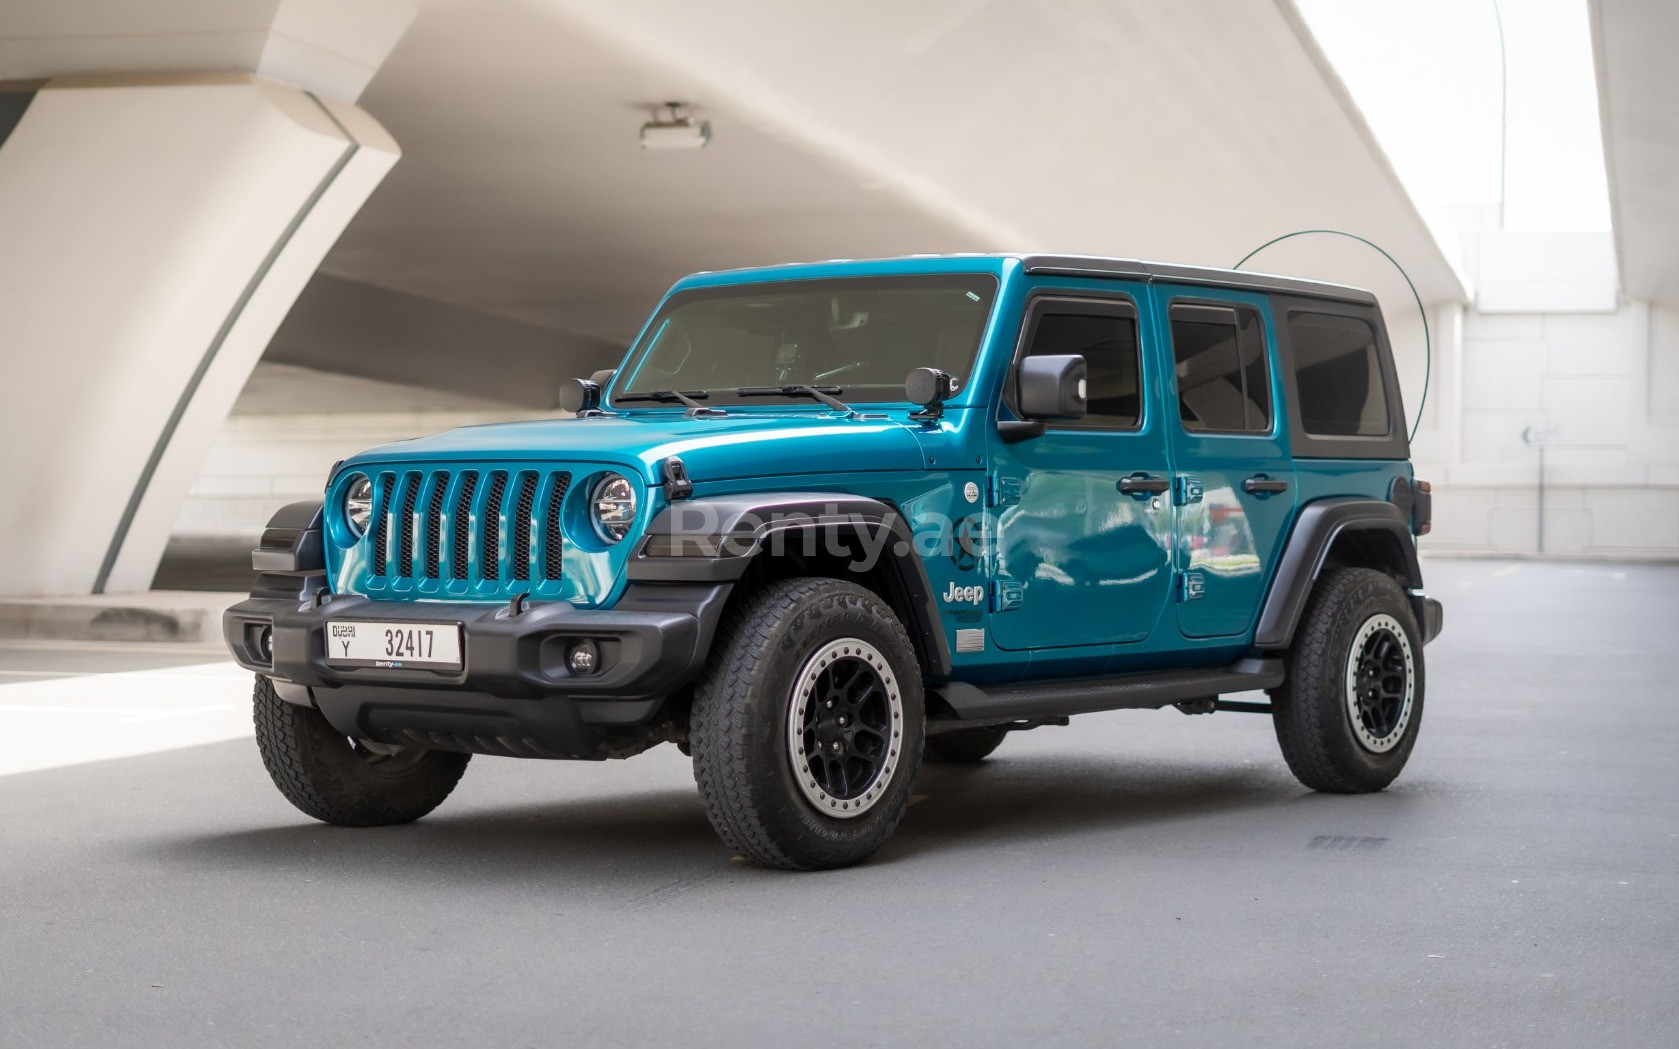 Jeep Wrangler Rental in Abu-Dhabi, Hire a Jeep Wrangler Car for Good Price  at Renty